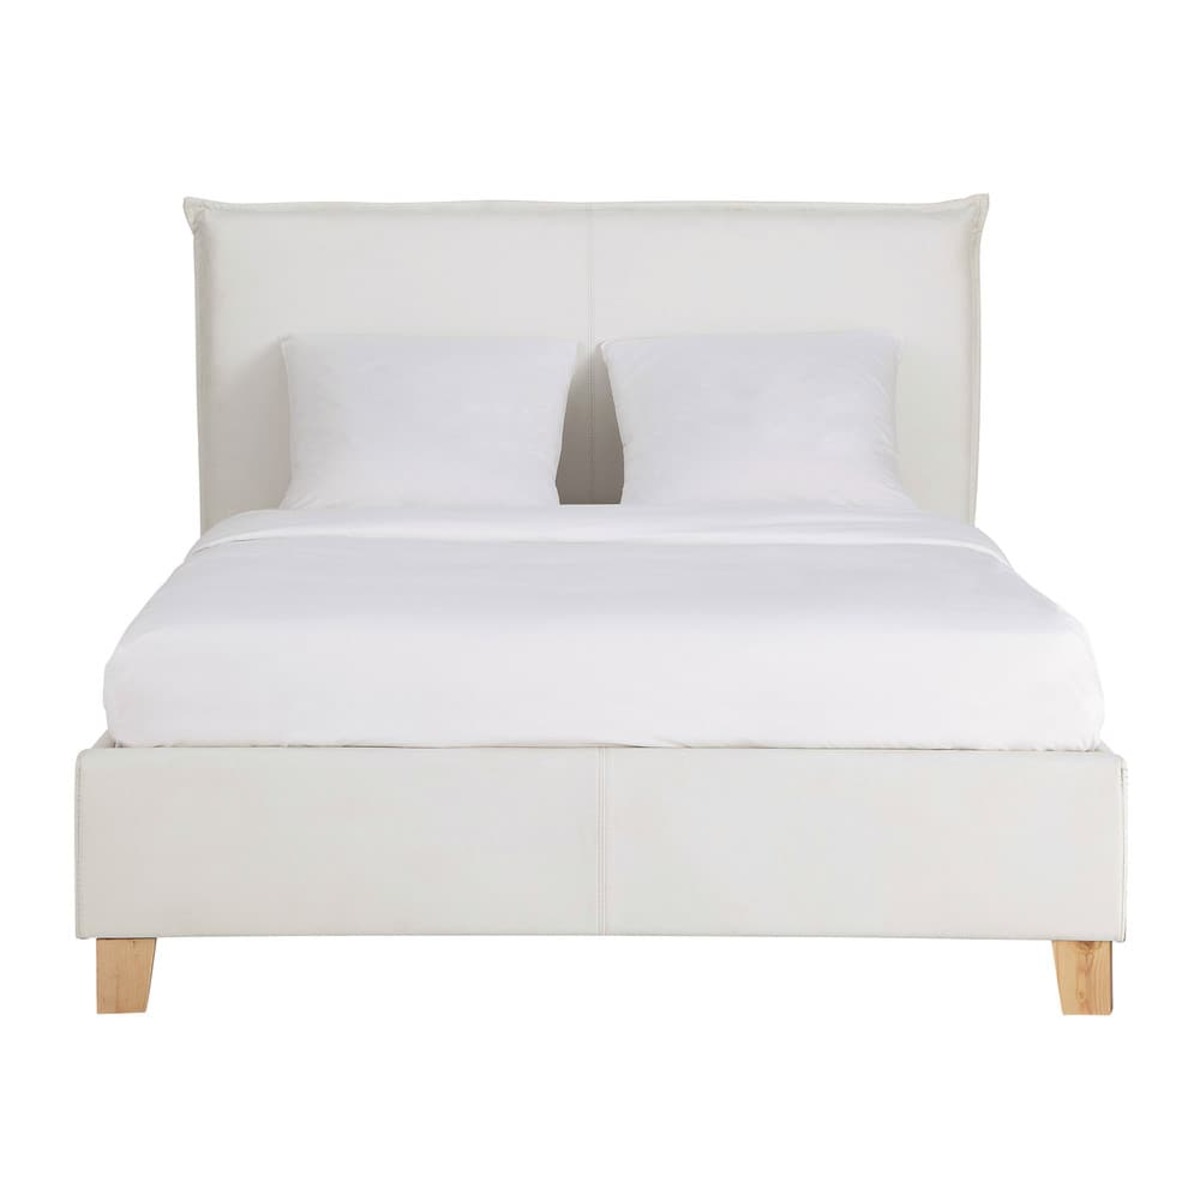 Cama-baúl con somier de láminas 140x190 blanca Pillow